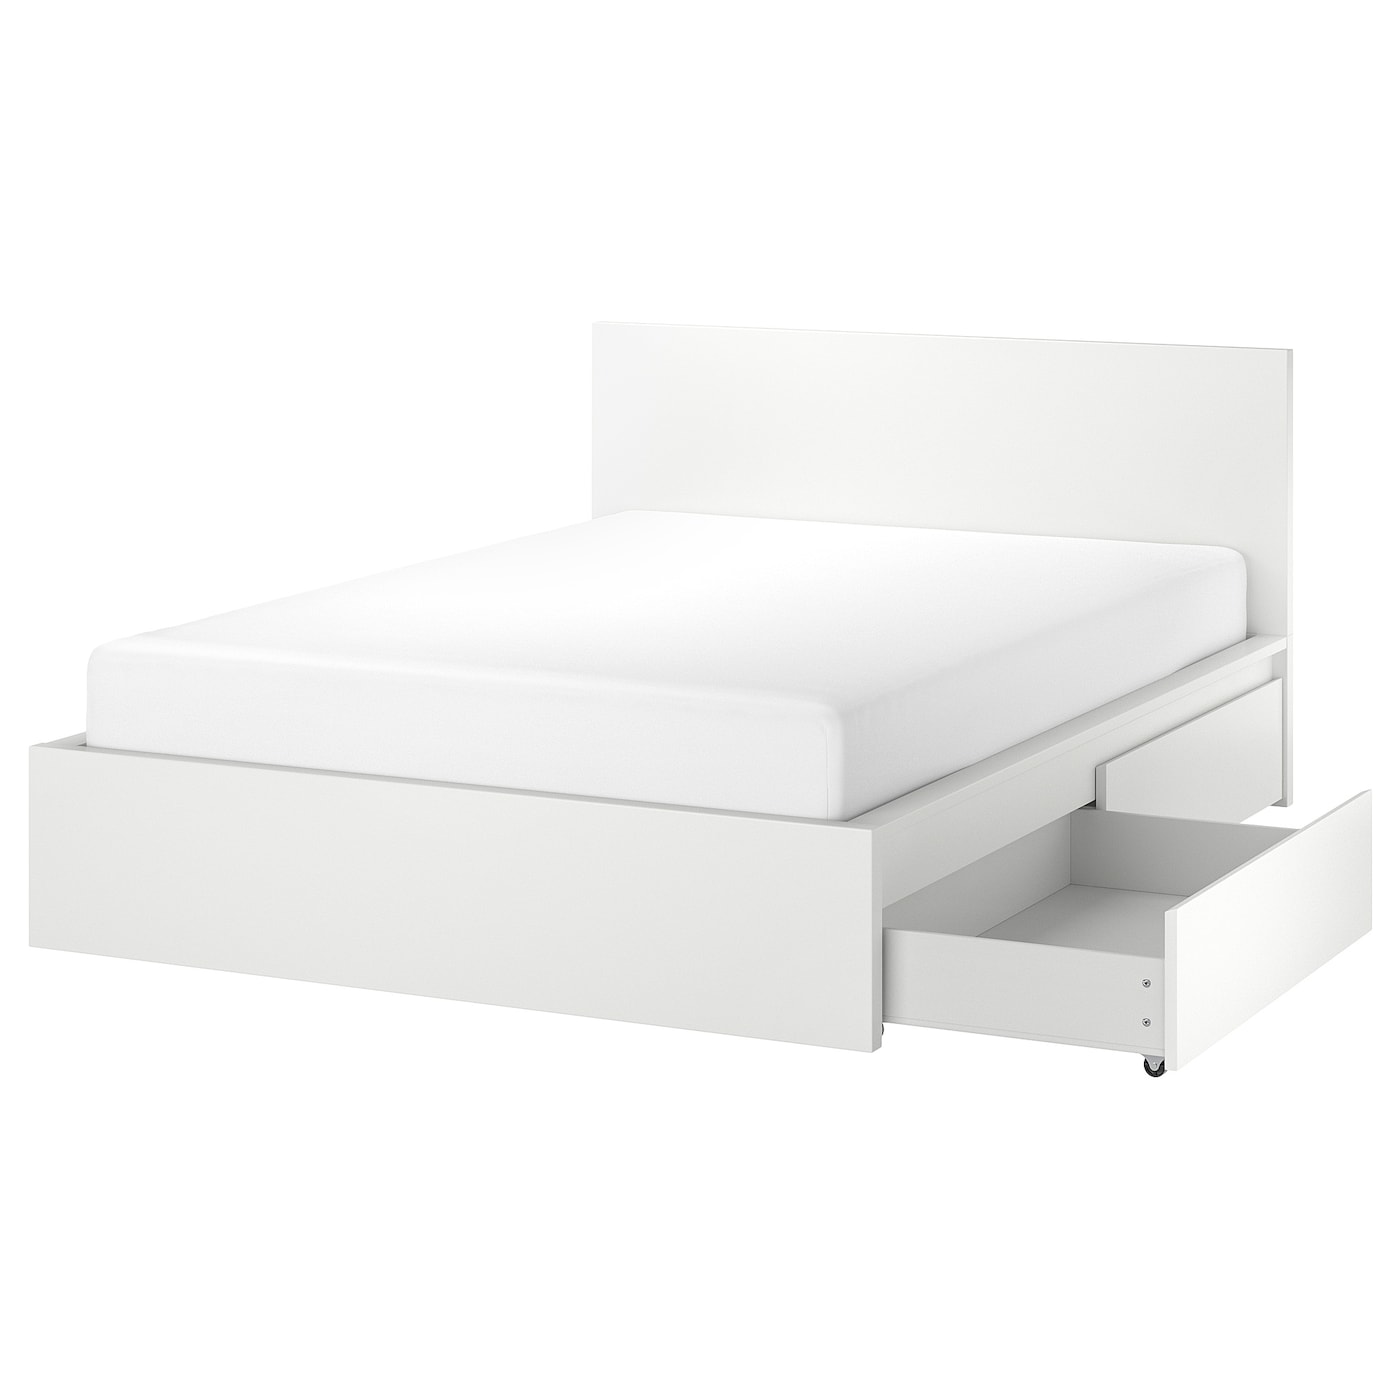 Каркас кровати с 2 ящиками для хранения - IKEA MALM/LUROY/LURÖY, 160х200 см, белый МАЛЬМ/ЛУРОЙ ИКЕА